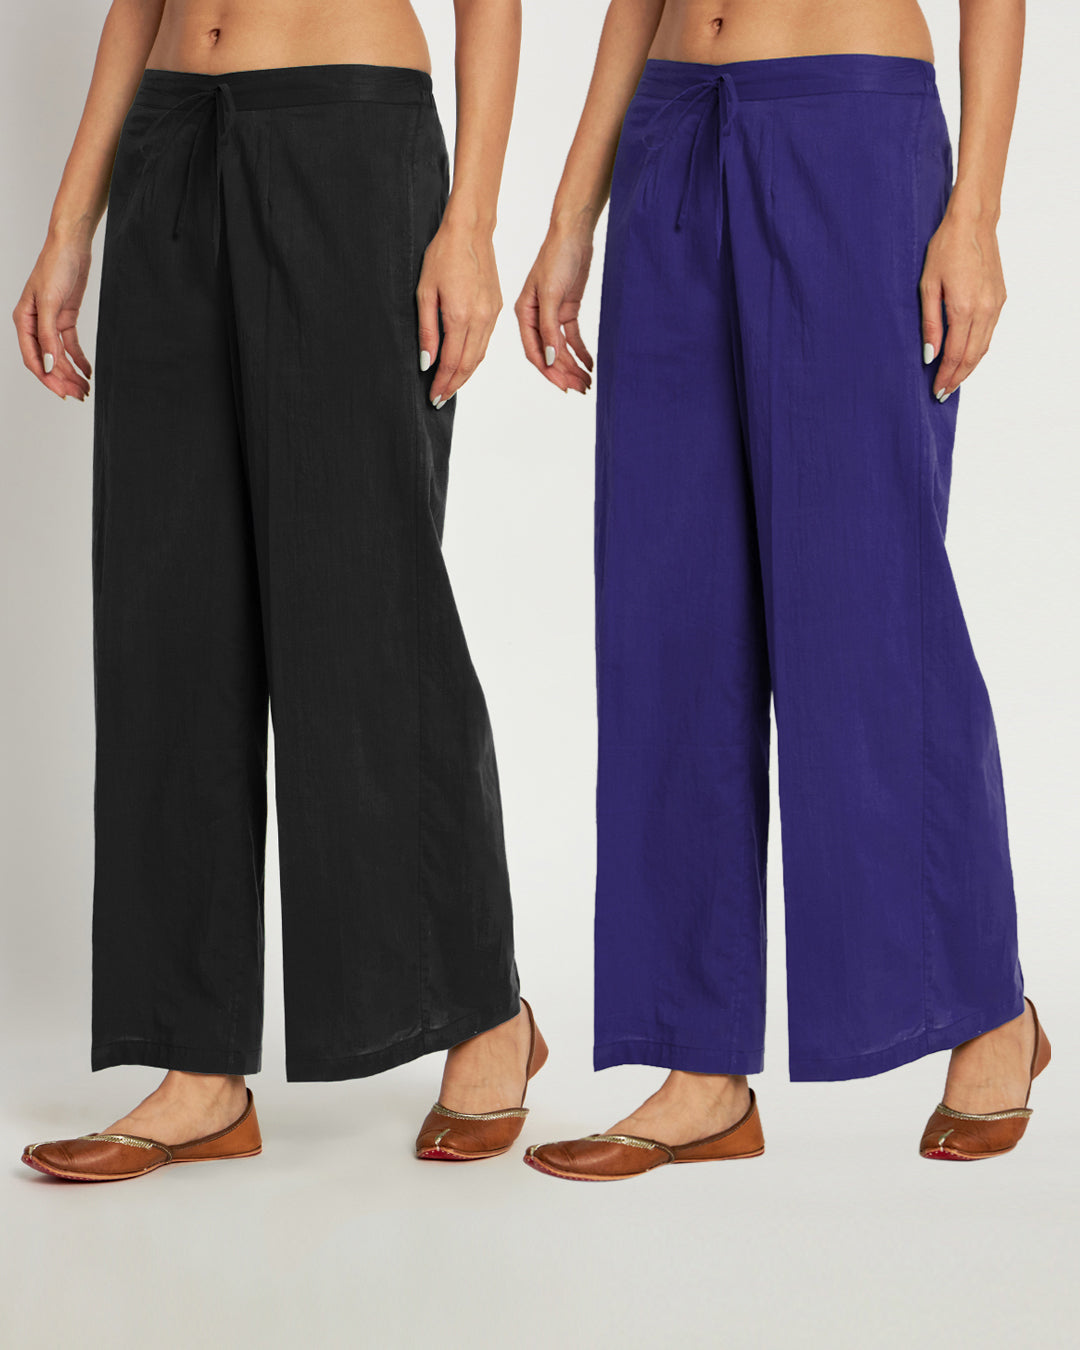 Combo: Black & Aurora Purple Wide Pants- Set Of 2